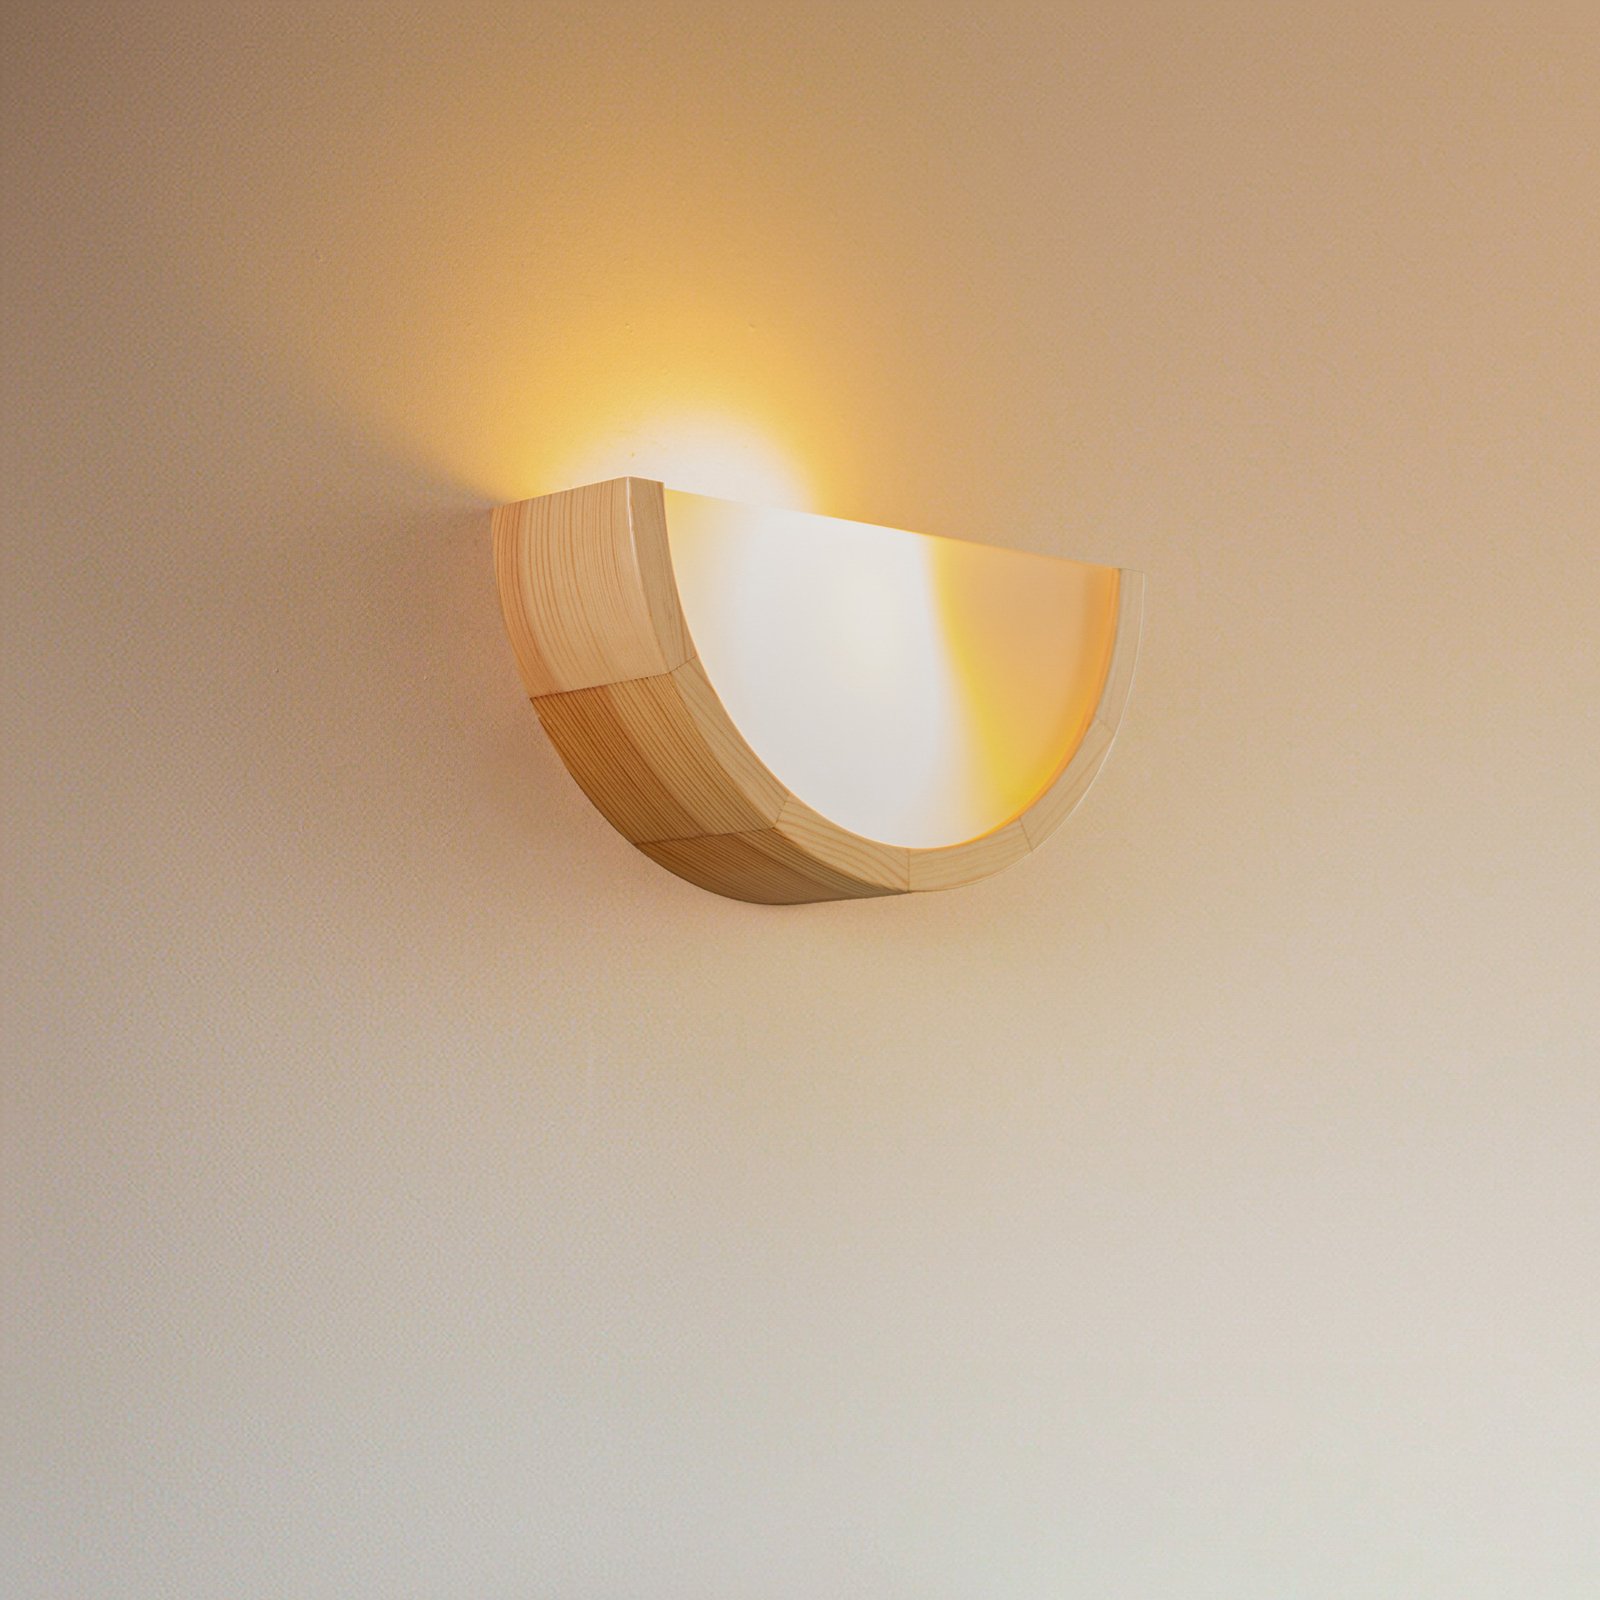 Envostar Kerio wall lamp, 27.5 cm, natural pine